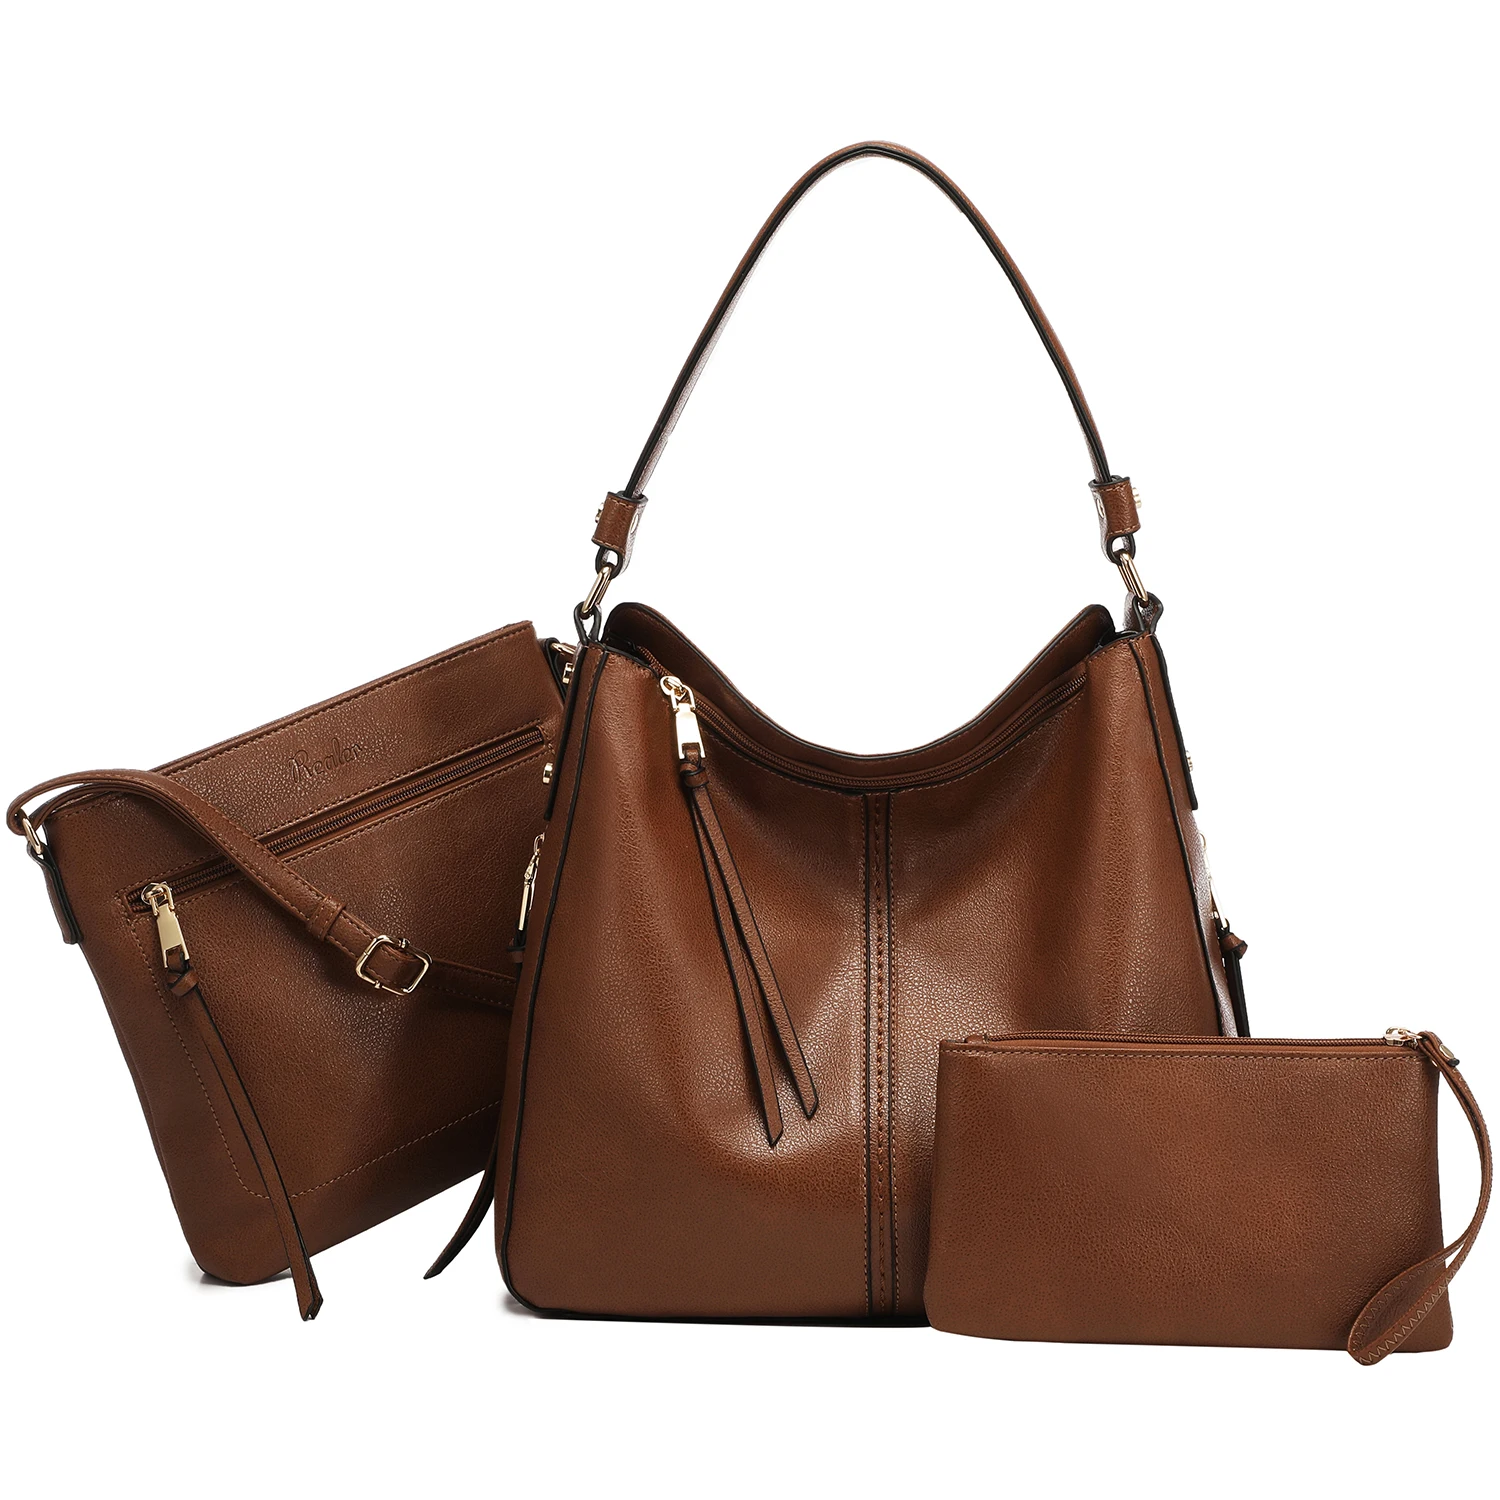 Designer Wholesale Shopping Bag: Womens Evening Backpack, Purse, And Cross  Wallet Handbag From Bag_shoes6, $33.29 | DHgate.Com